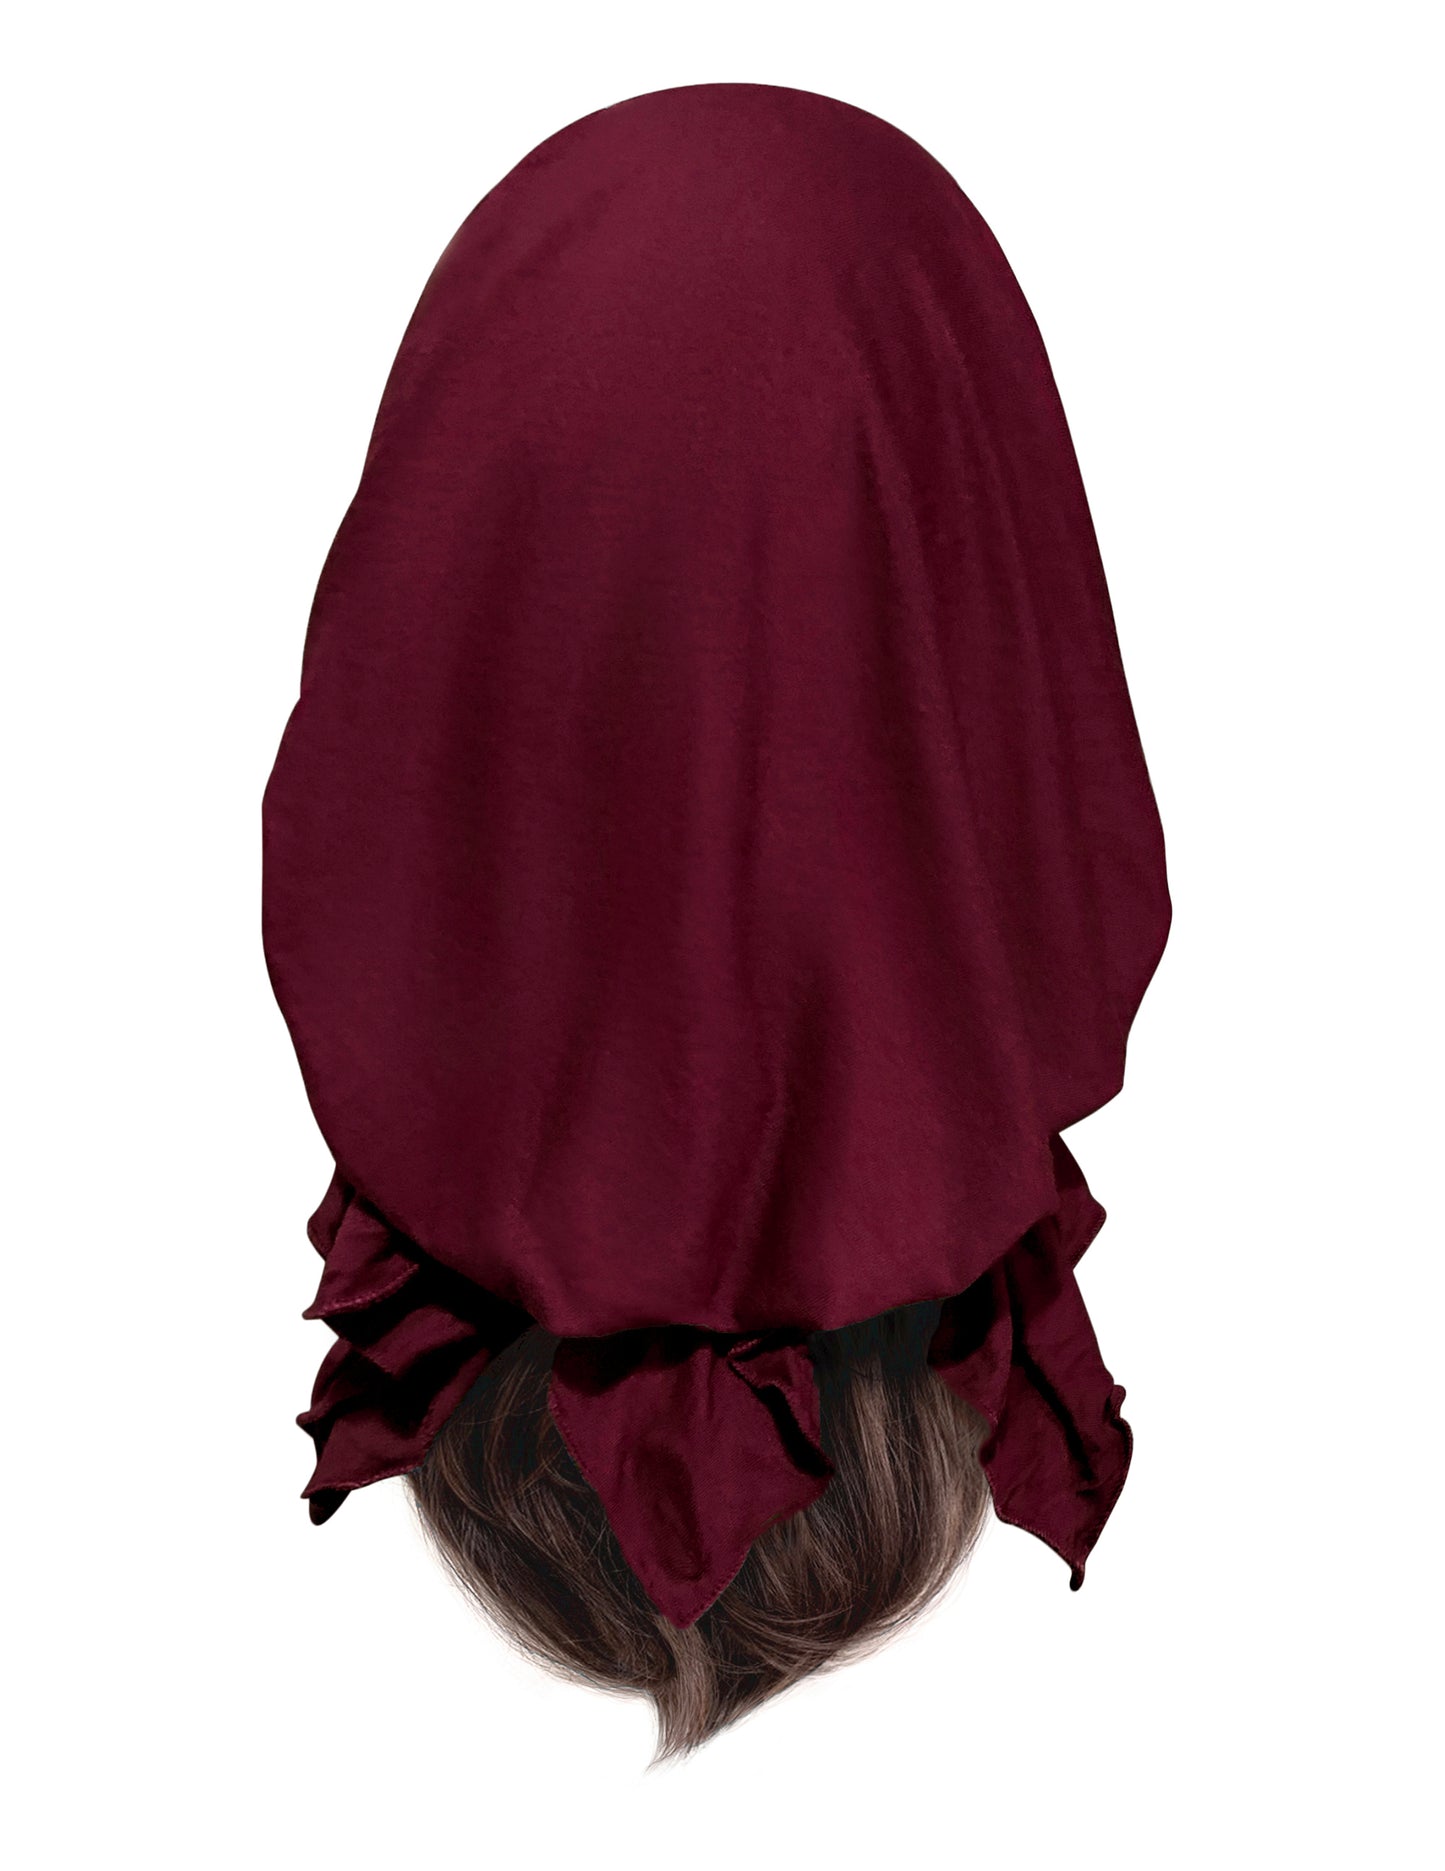 Burgundy red soft cotton pre-tied headscarf